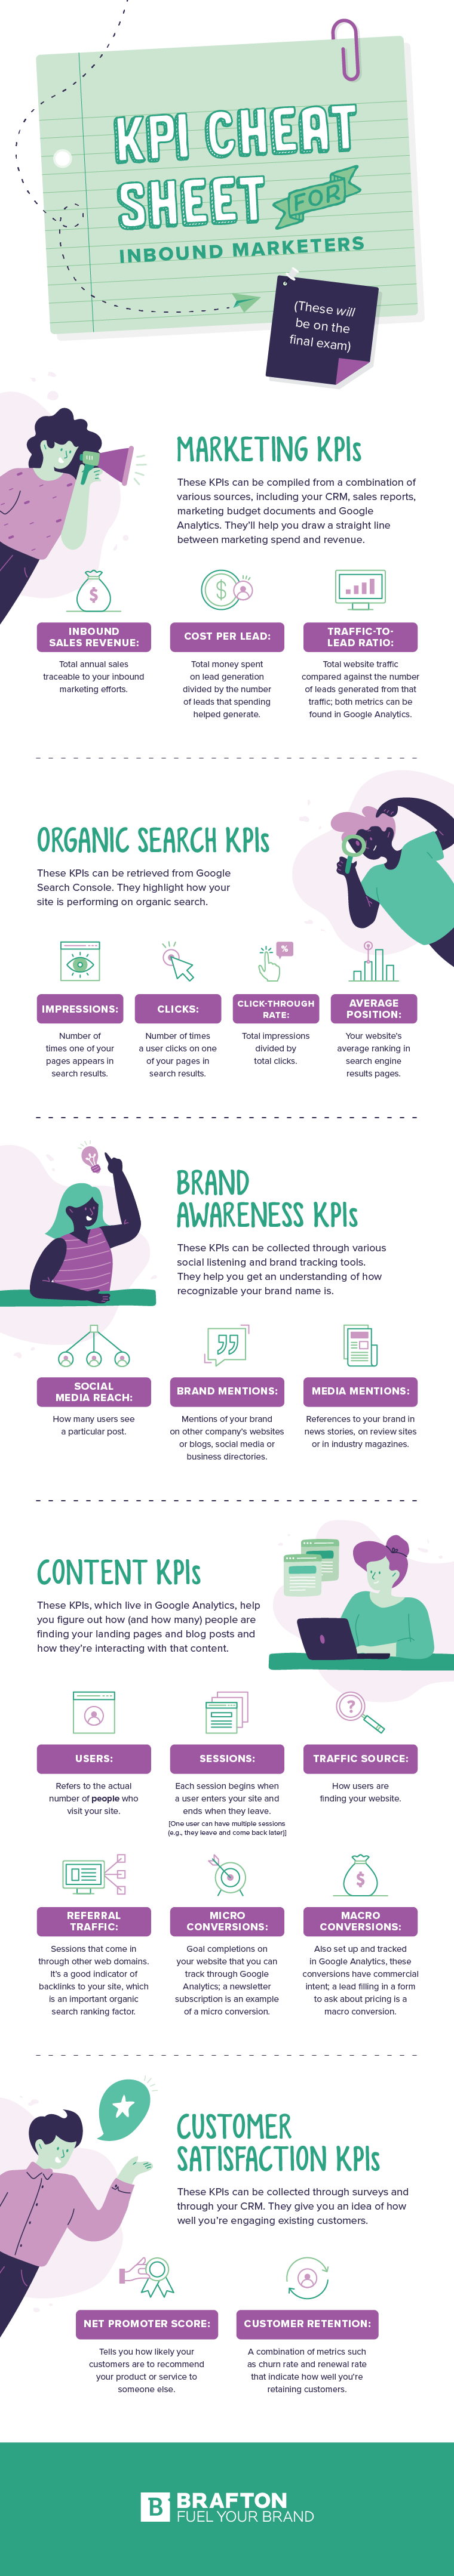 Key marketing KPI examples infographic